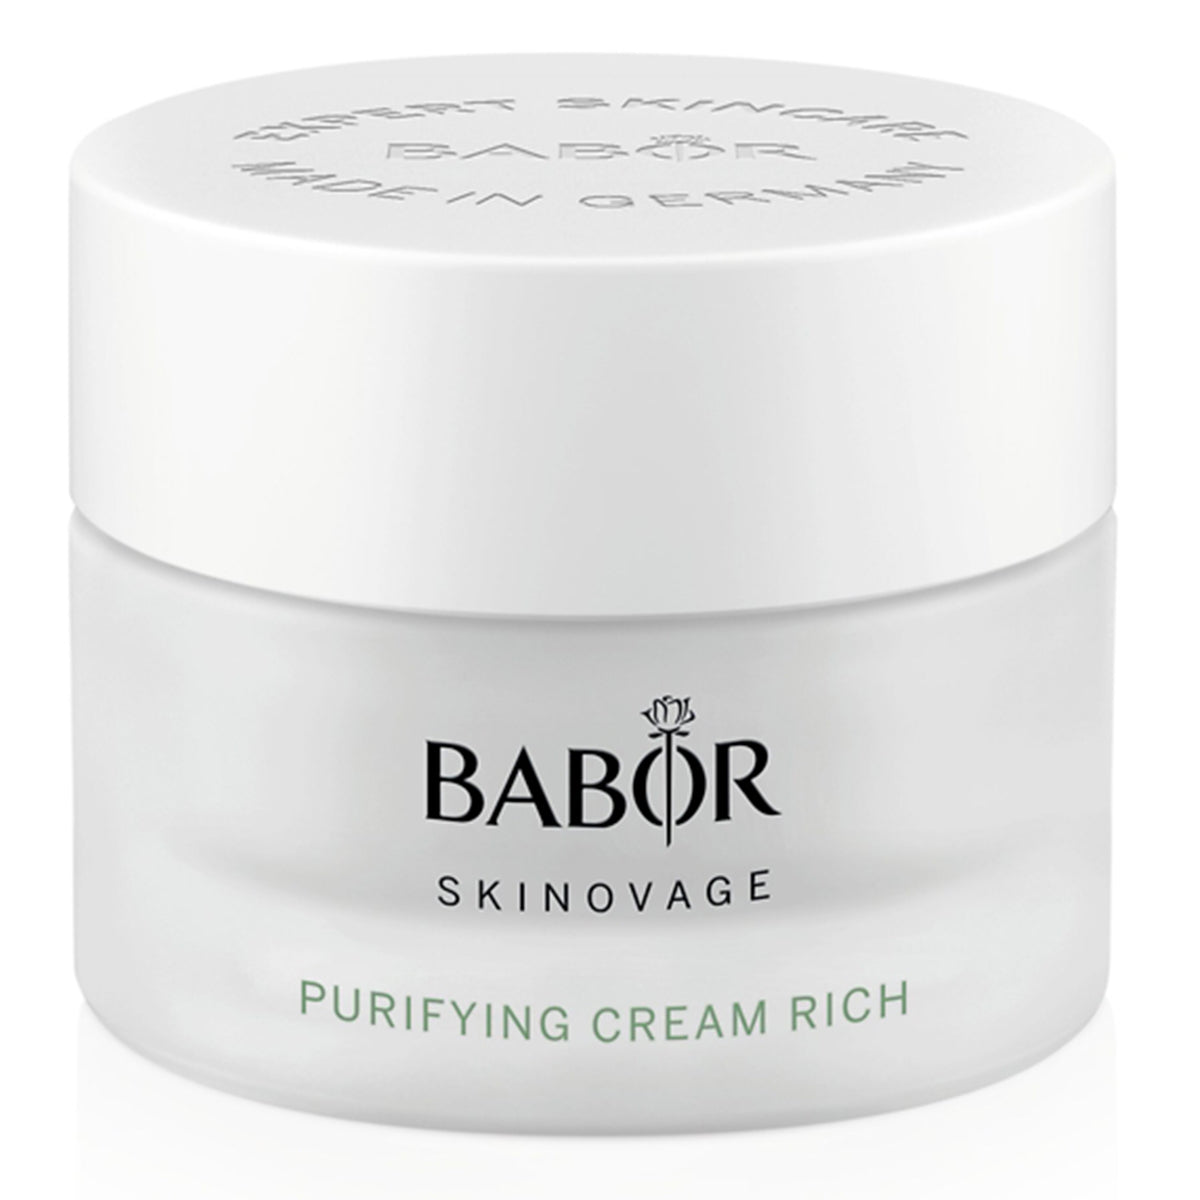 Skinovage Purifying Cream Rich 50 ml